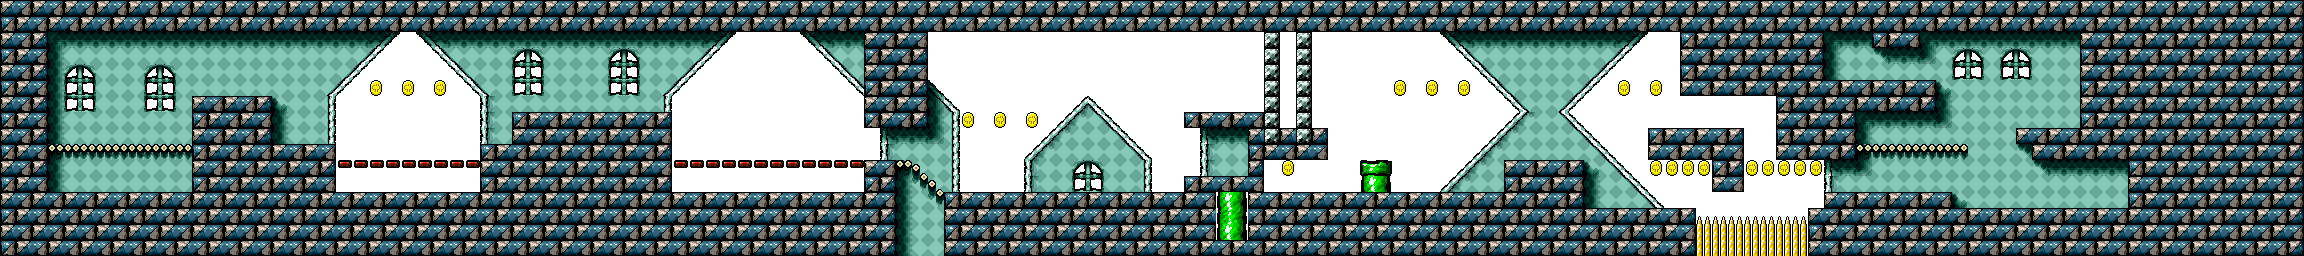 Super Mario World 2: Yoshi's Island - 6-8: King Bowser's Castle - Door 2 (1/3)